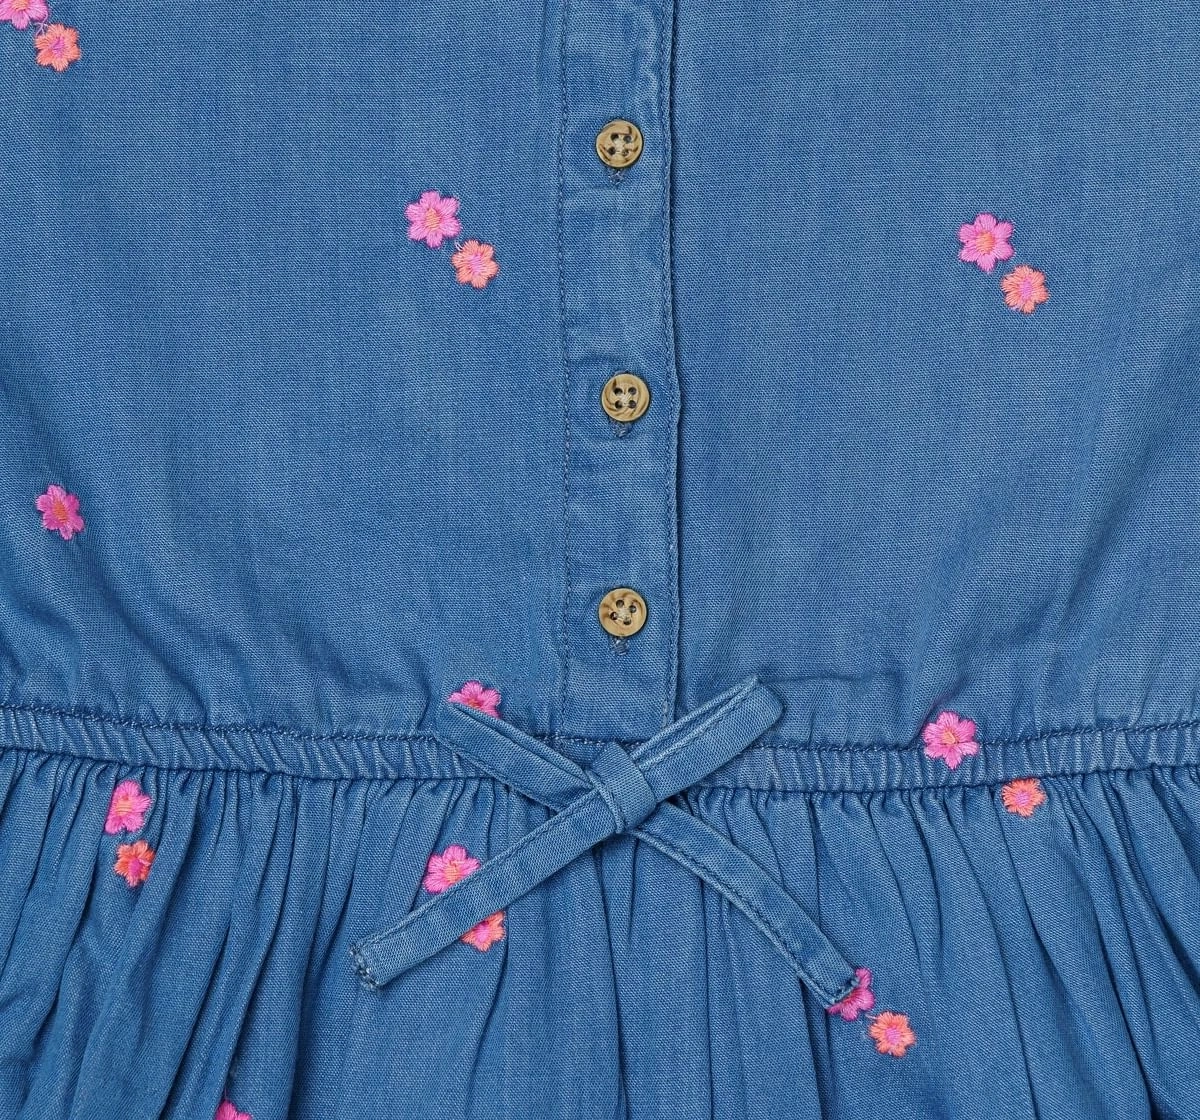 H by Hamleys Girls Short Sleeves Dress Denim -Blue